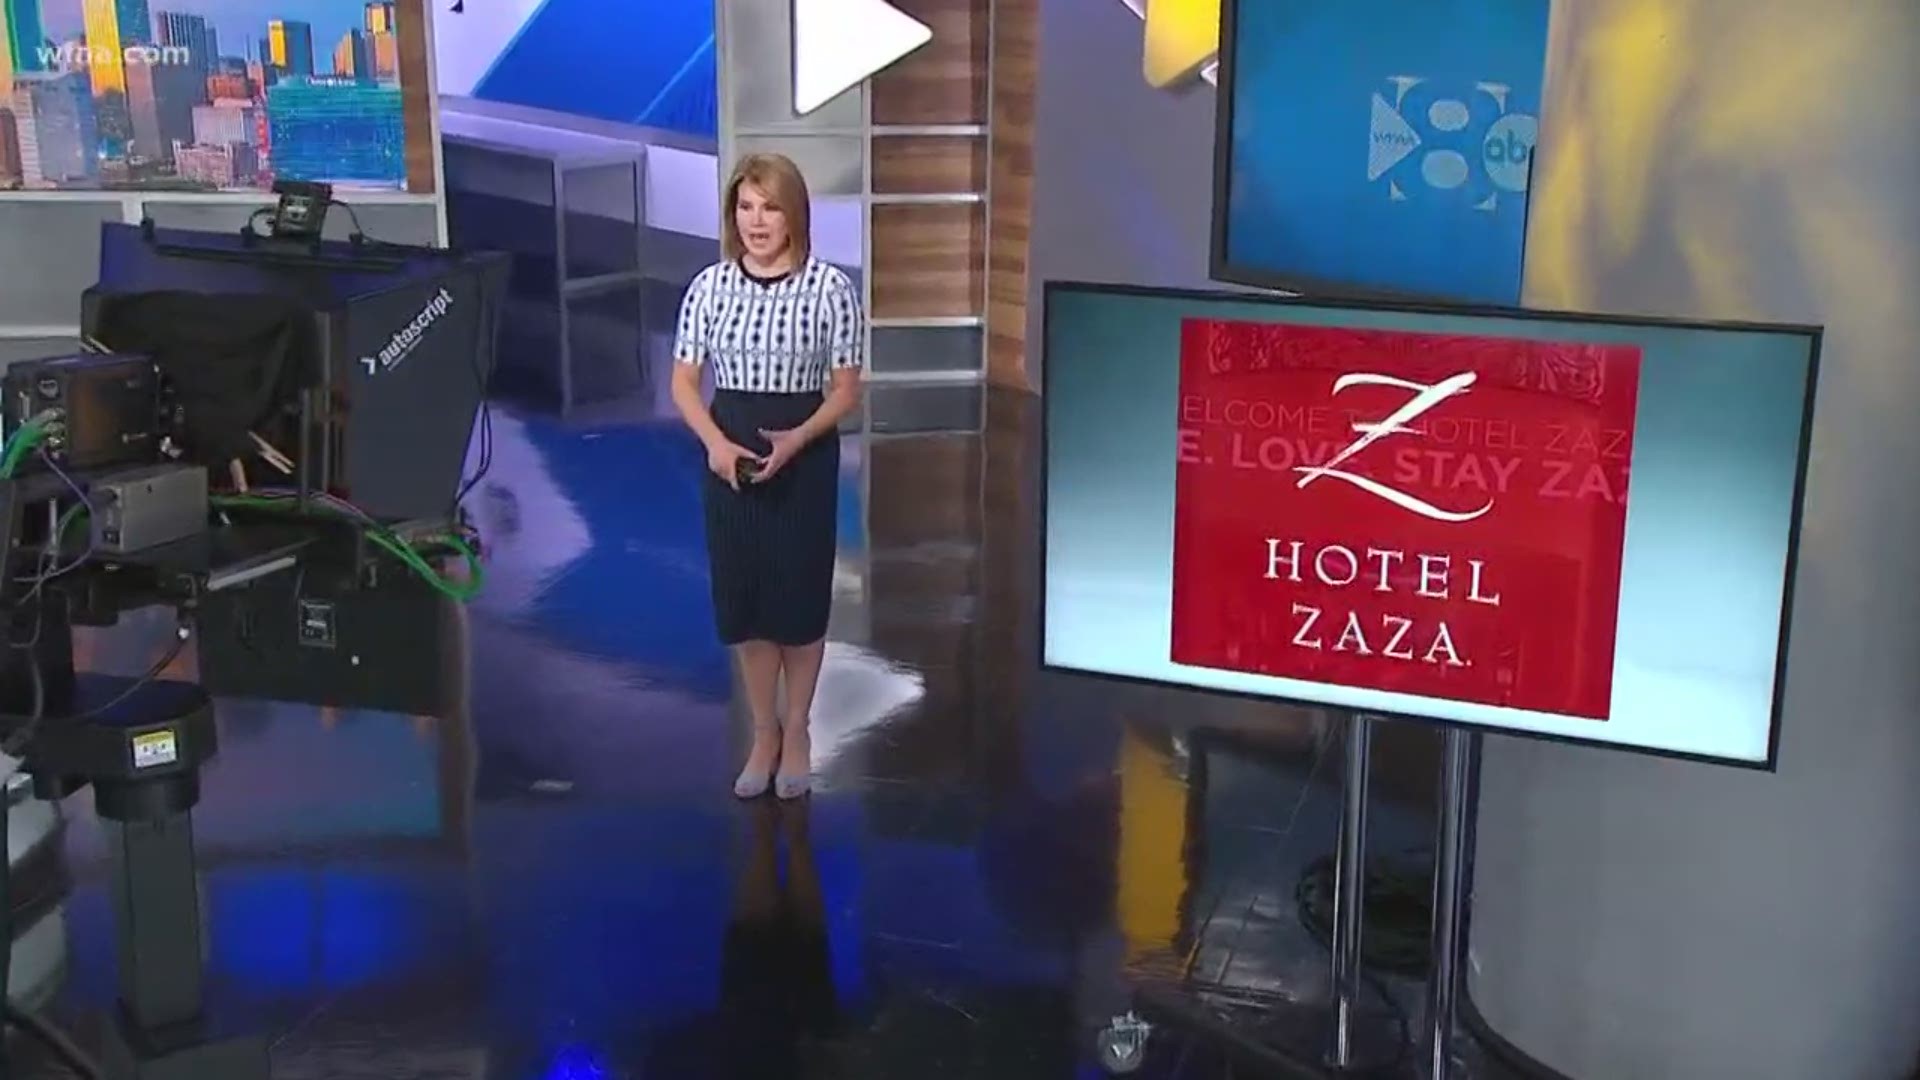 Woman shot to death at Hotel ZaZa in Dallas according to Police